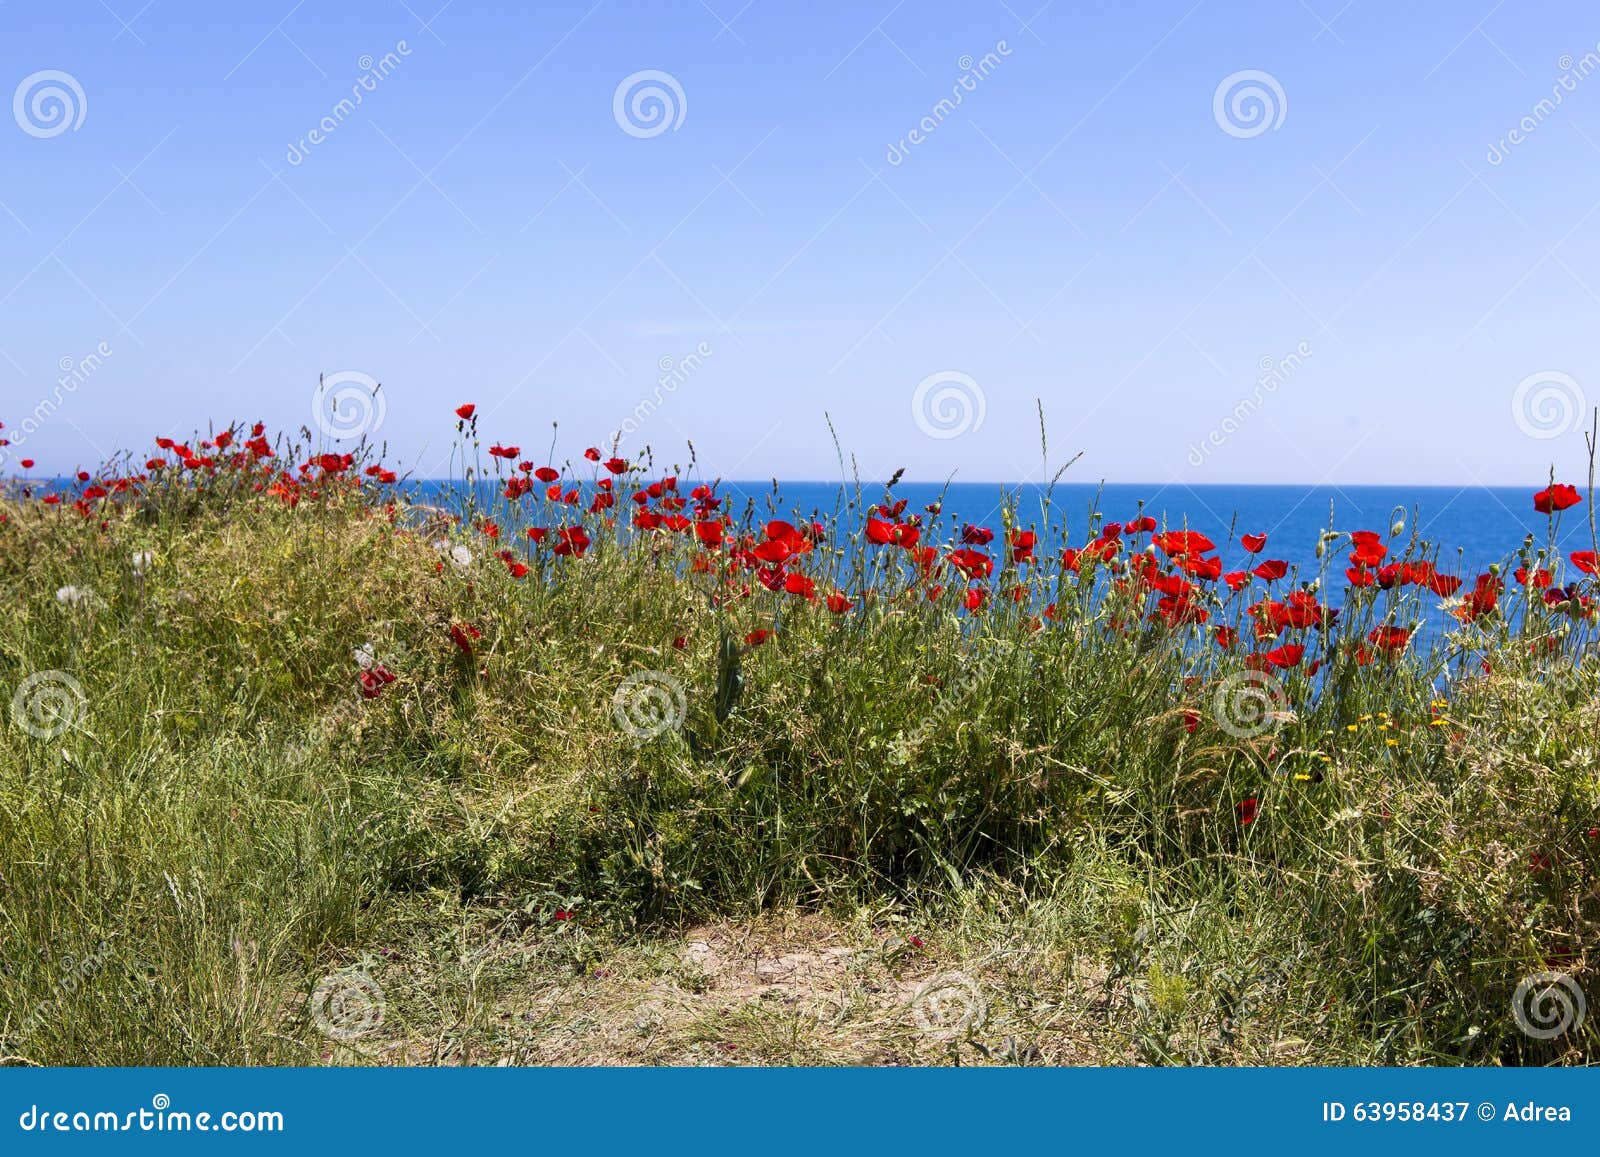 Poppy and Black Sea stock image. Image of garden, plant - 63958437